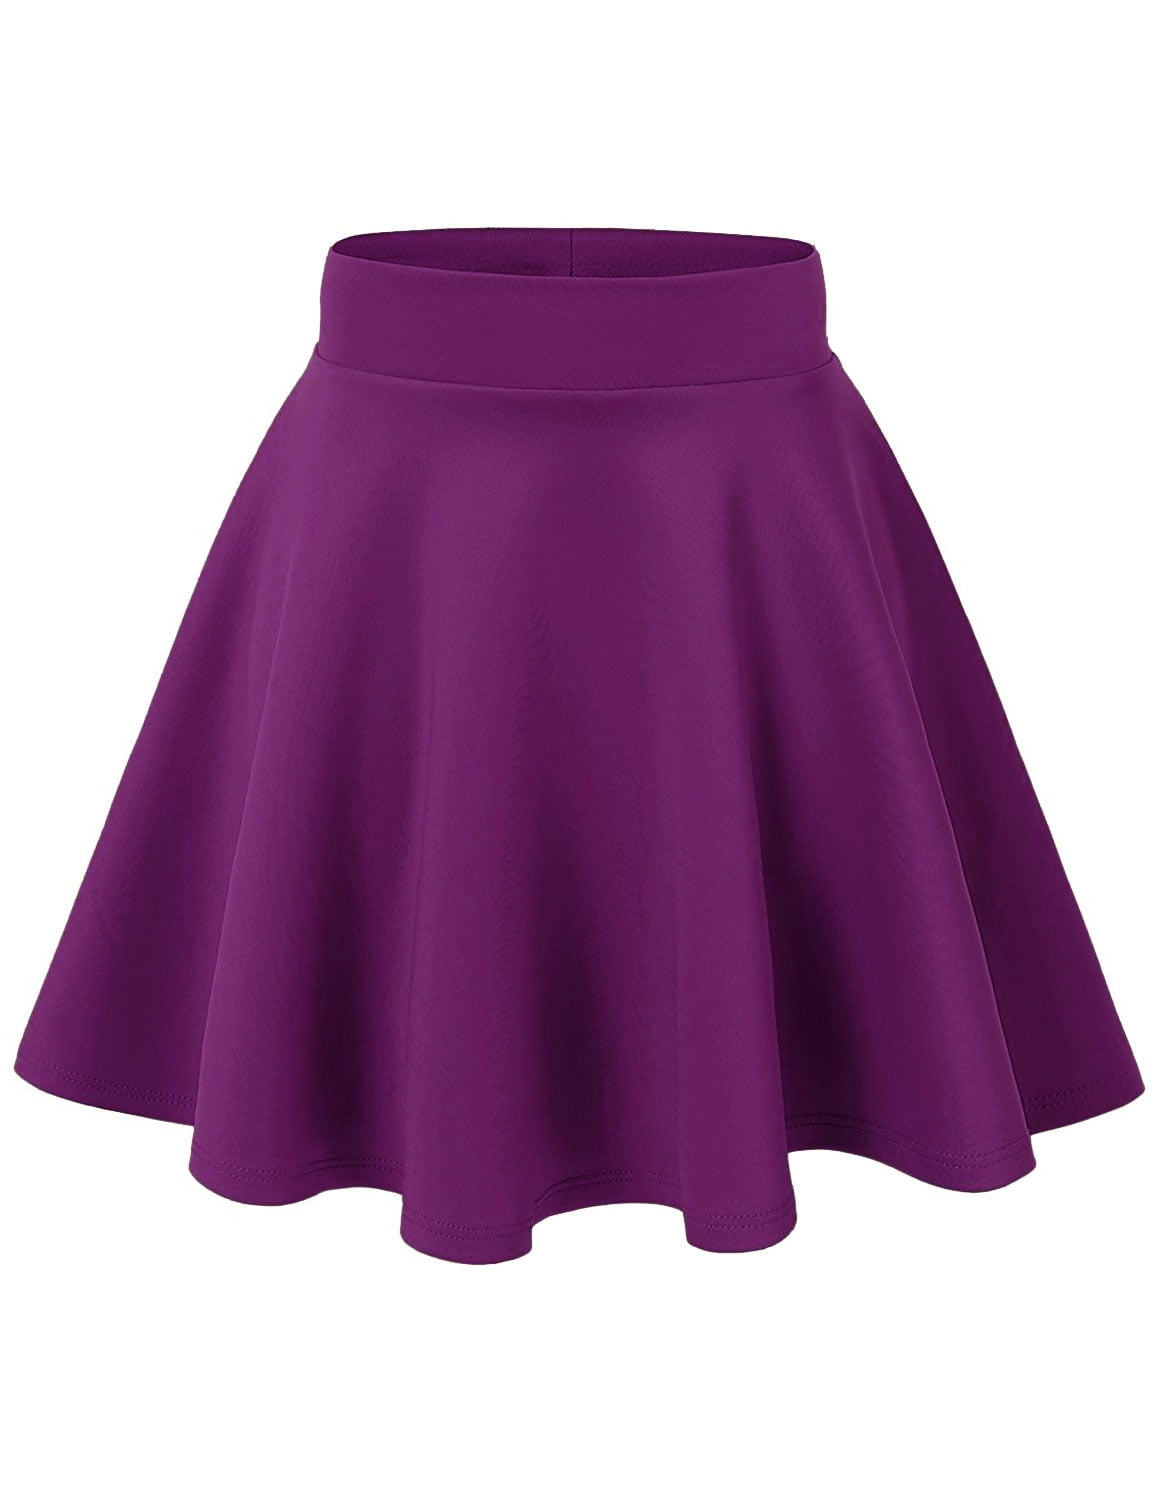 Plum Purple Tulle Skirt S